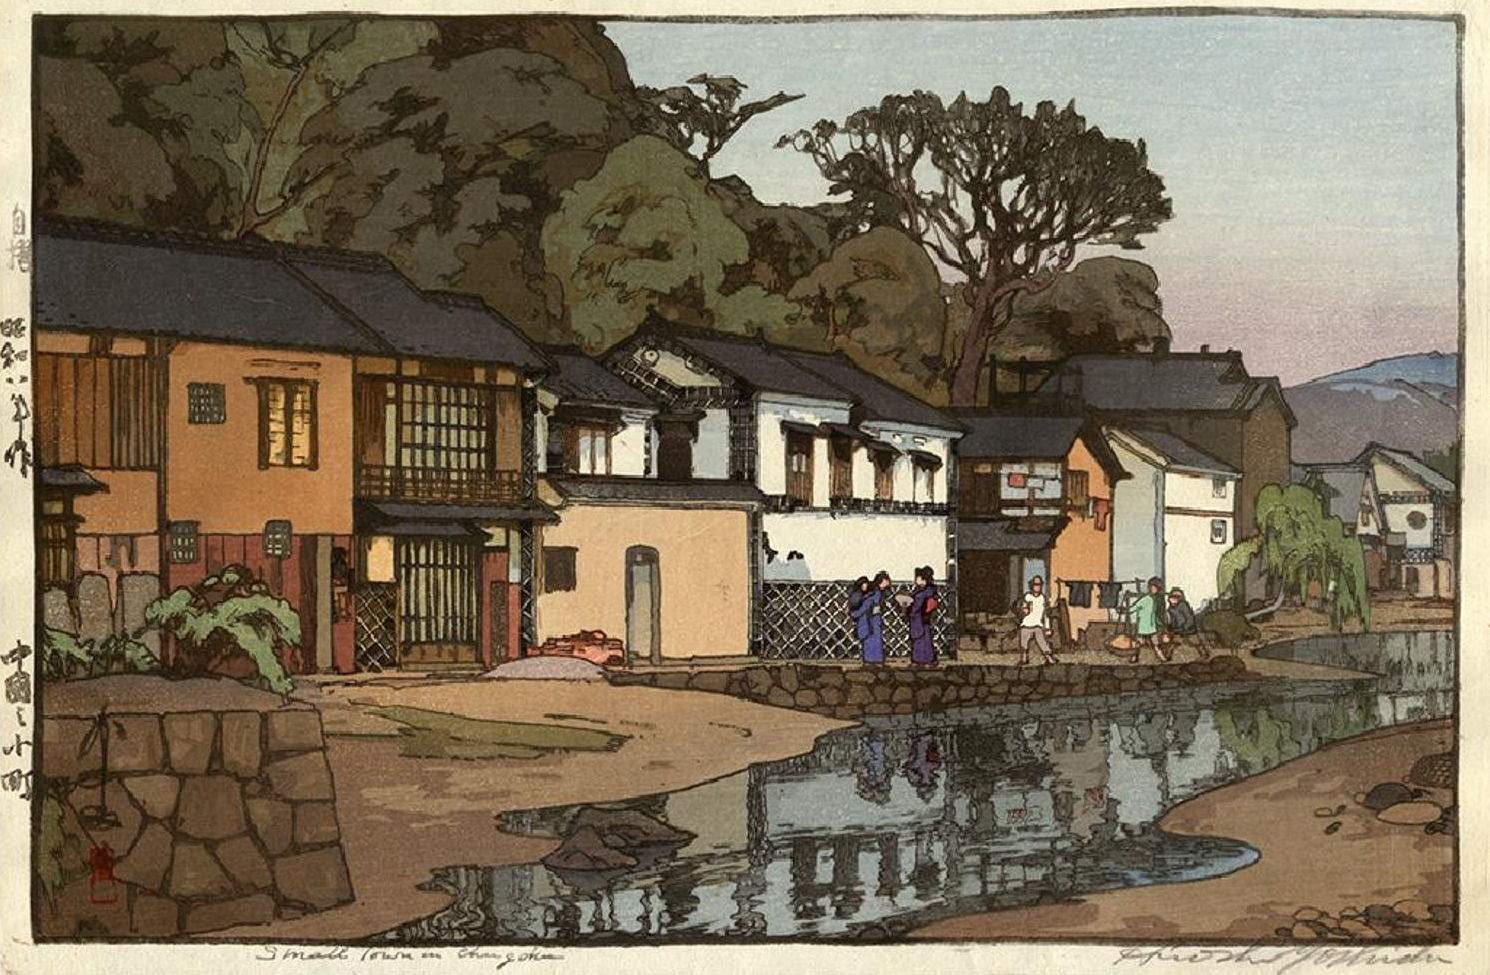 Hiroshi Yoshida “Small Town in Chugoku” 1933 woodblock print